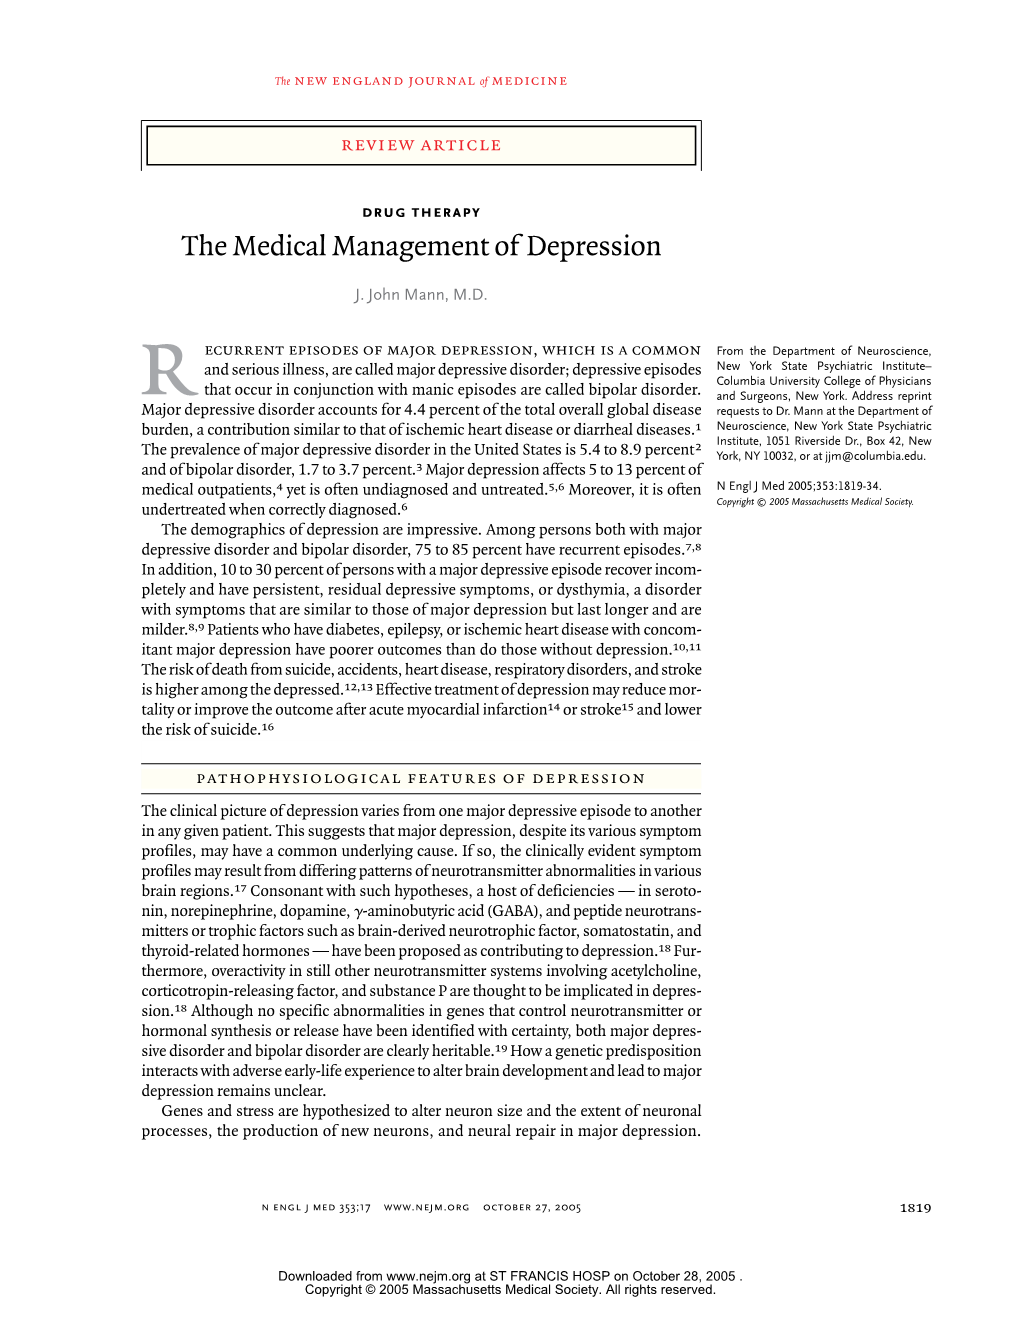 The Medical Management of Depression